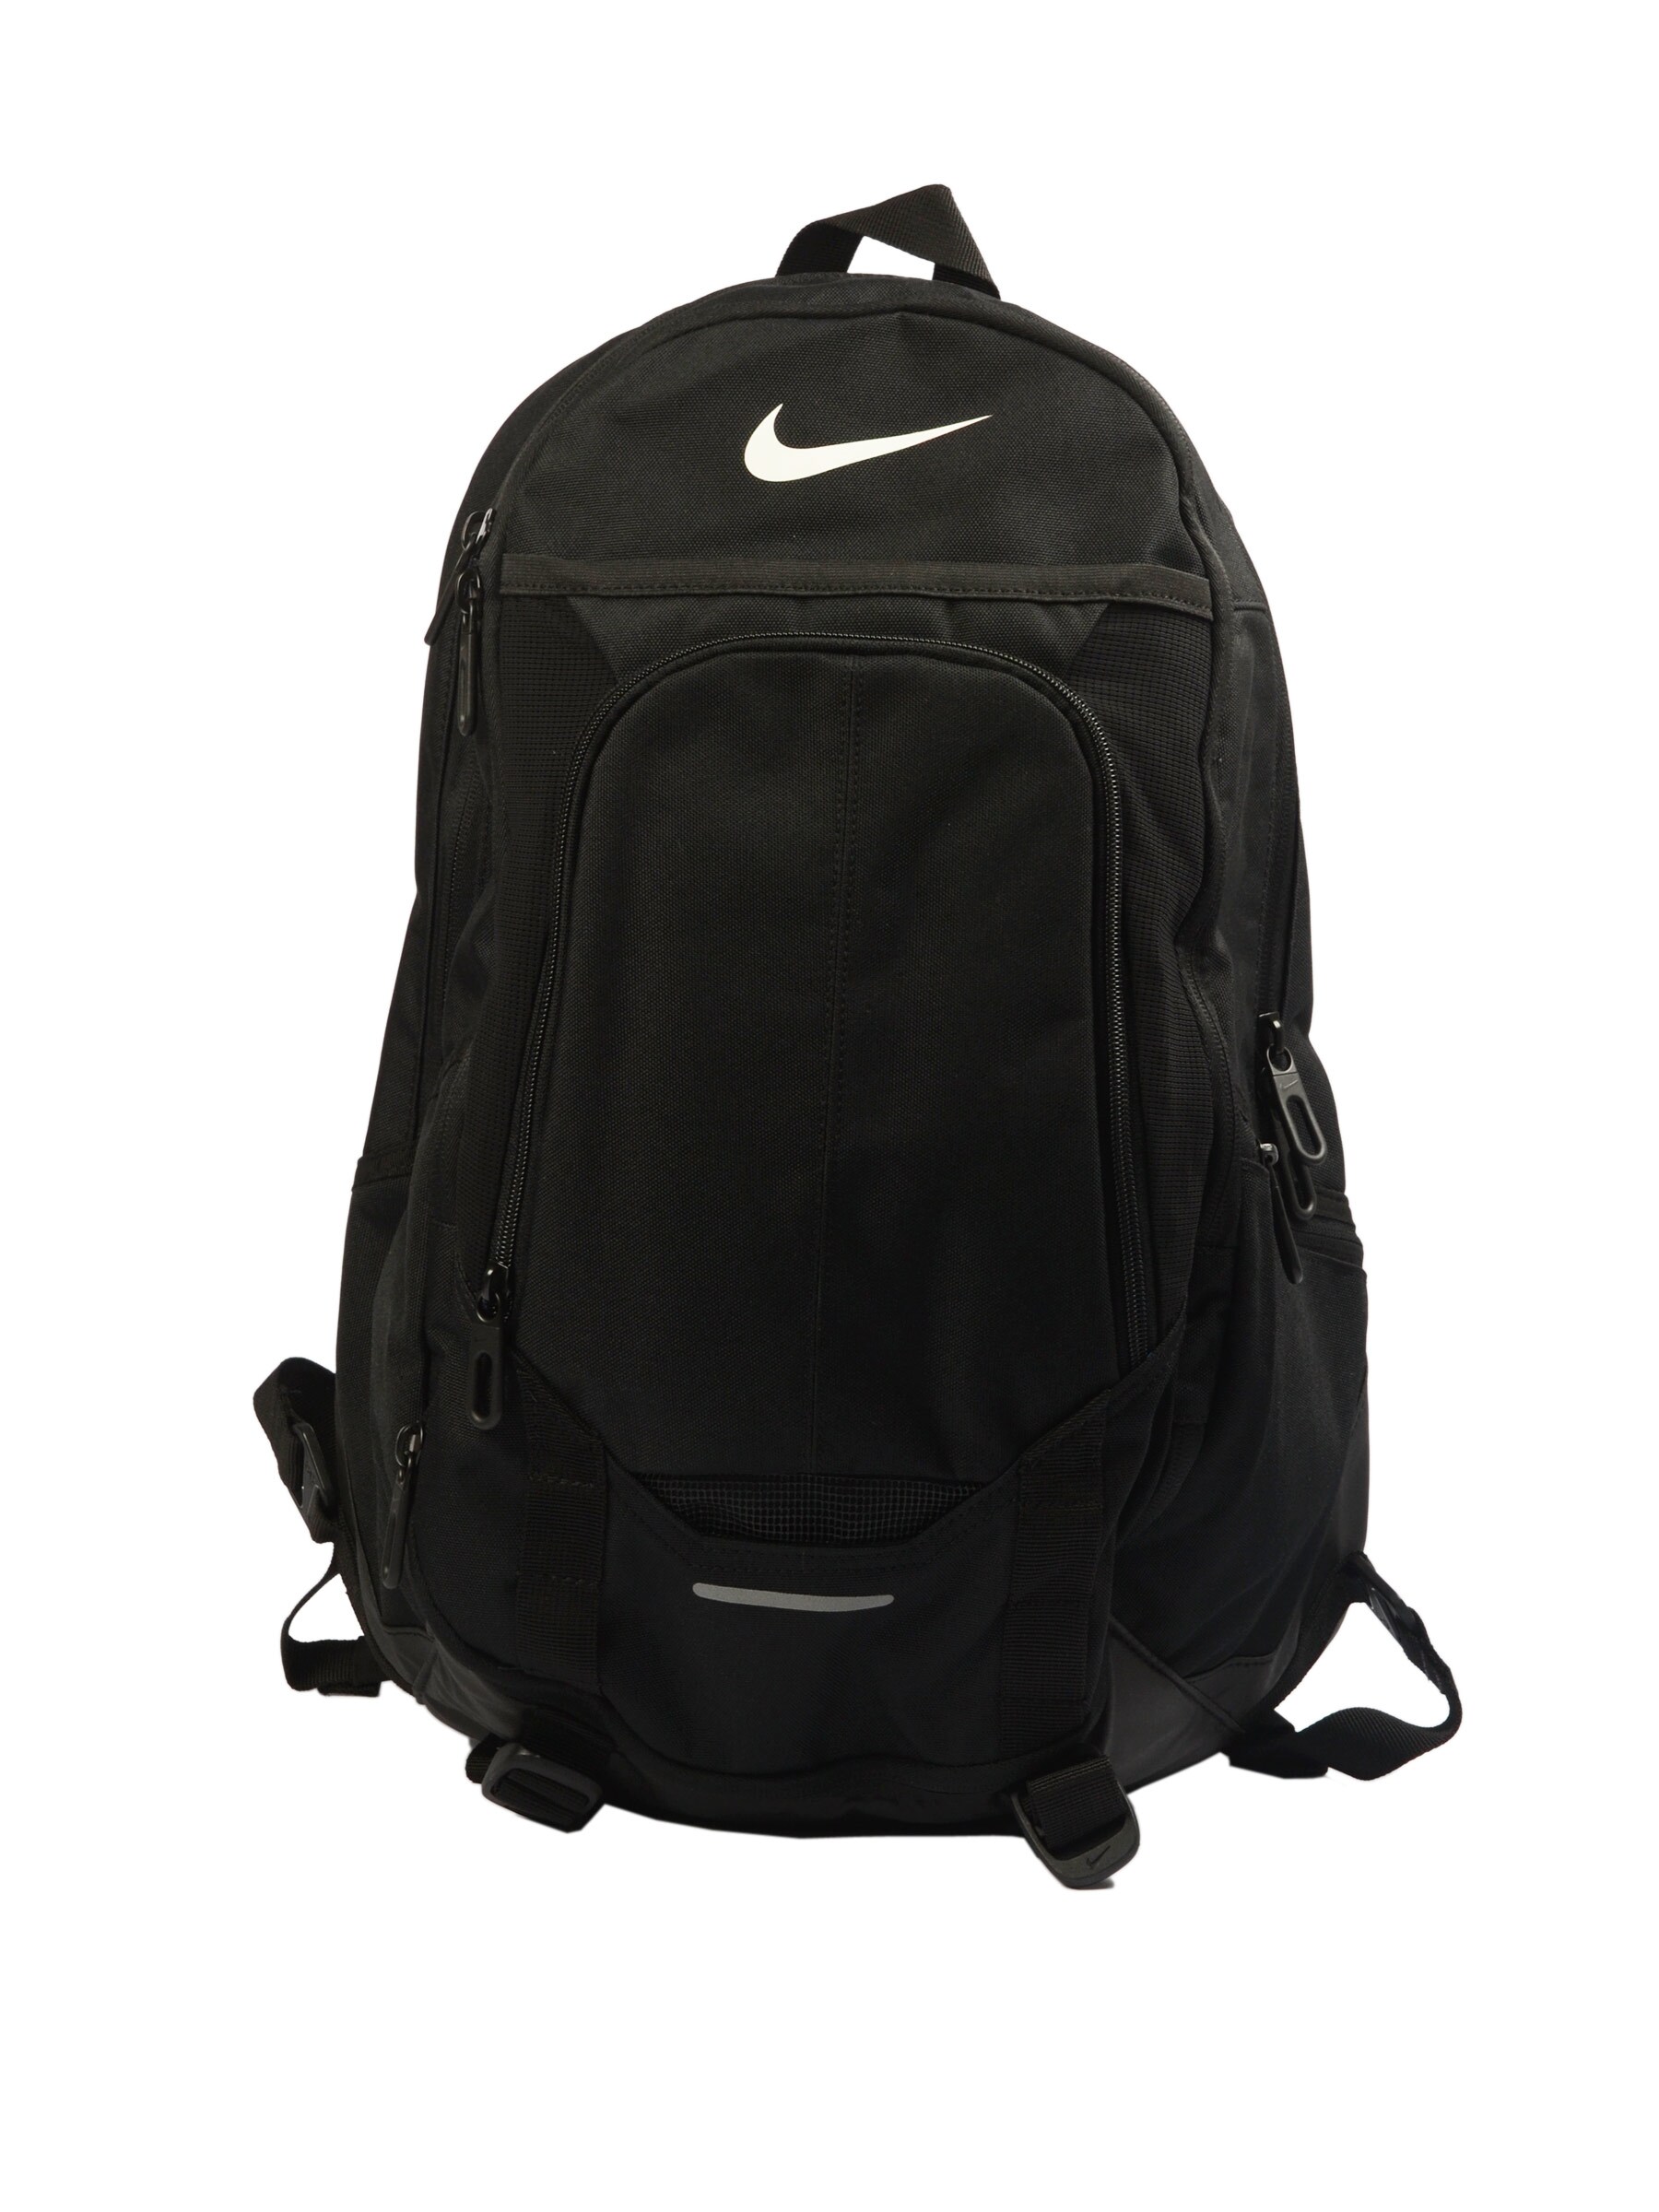 Nike Unisex Nike Black plain Black Backpacks